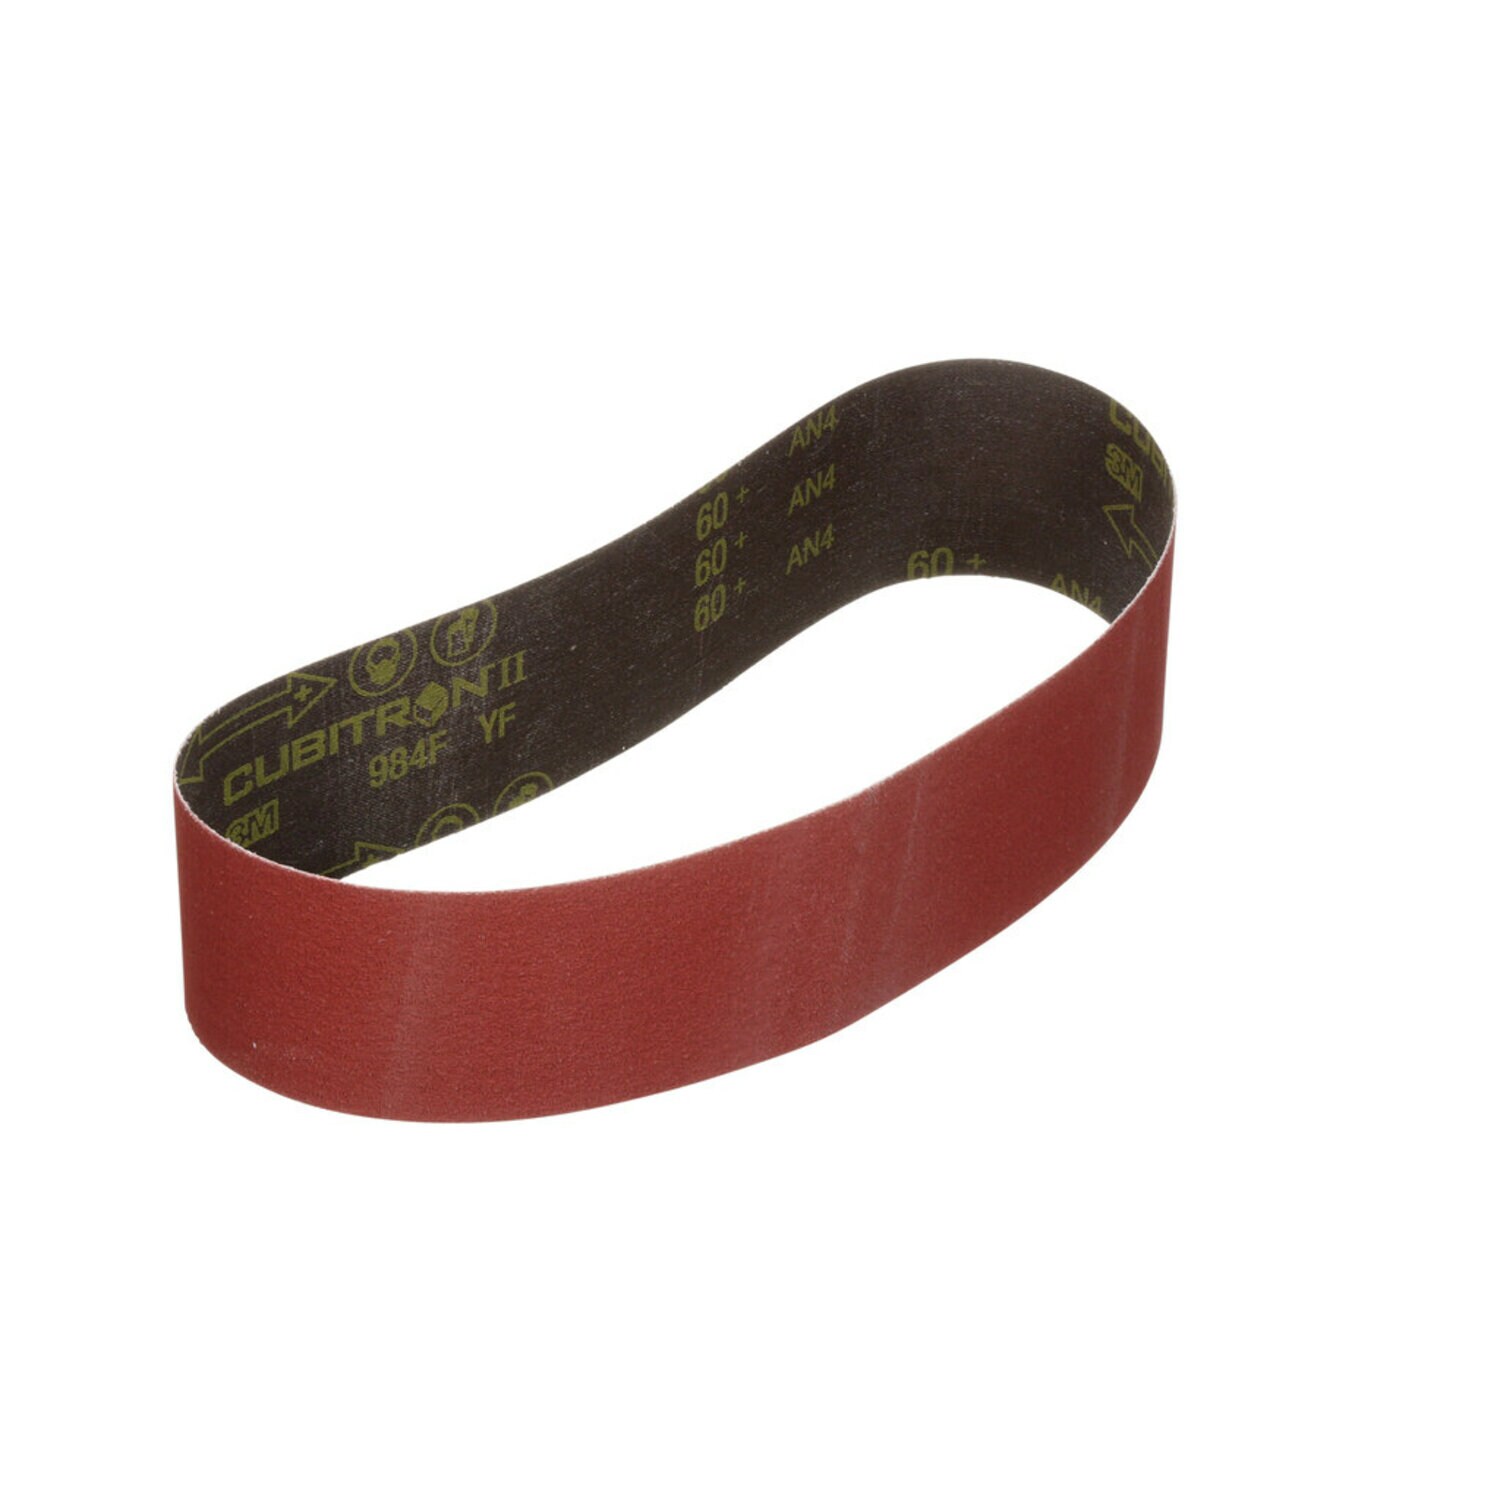 7010515600 - 3M Cubitron II Cloth Belt 984F, 80+ YF-weight, 6 in x 73 in, Film-lok,
Single-flex